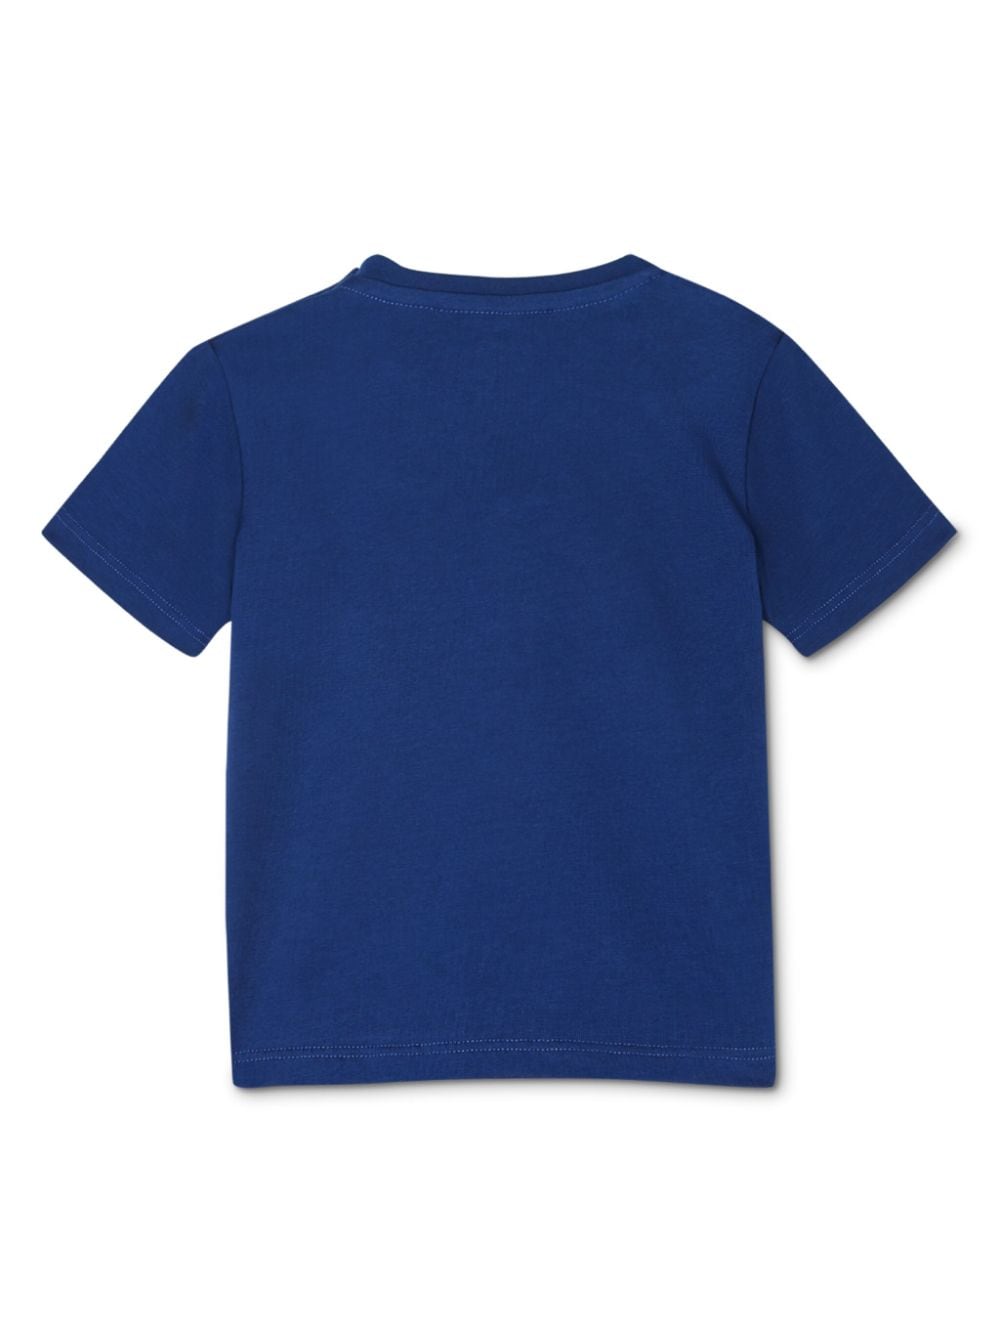 Blue cotton baby girl T-shirt